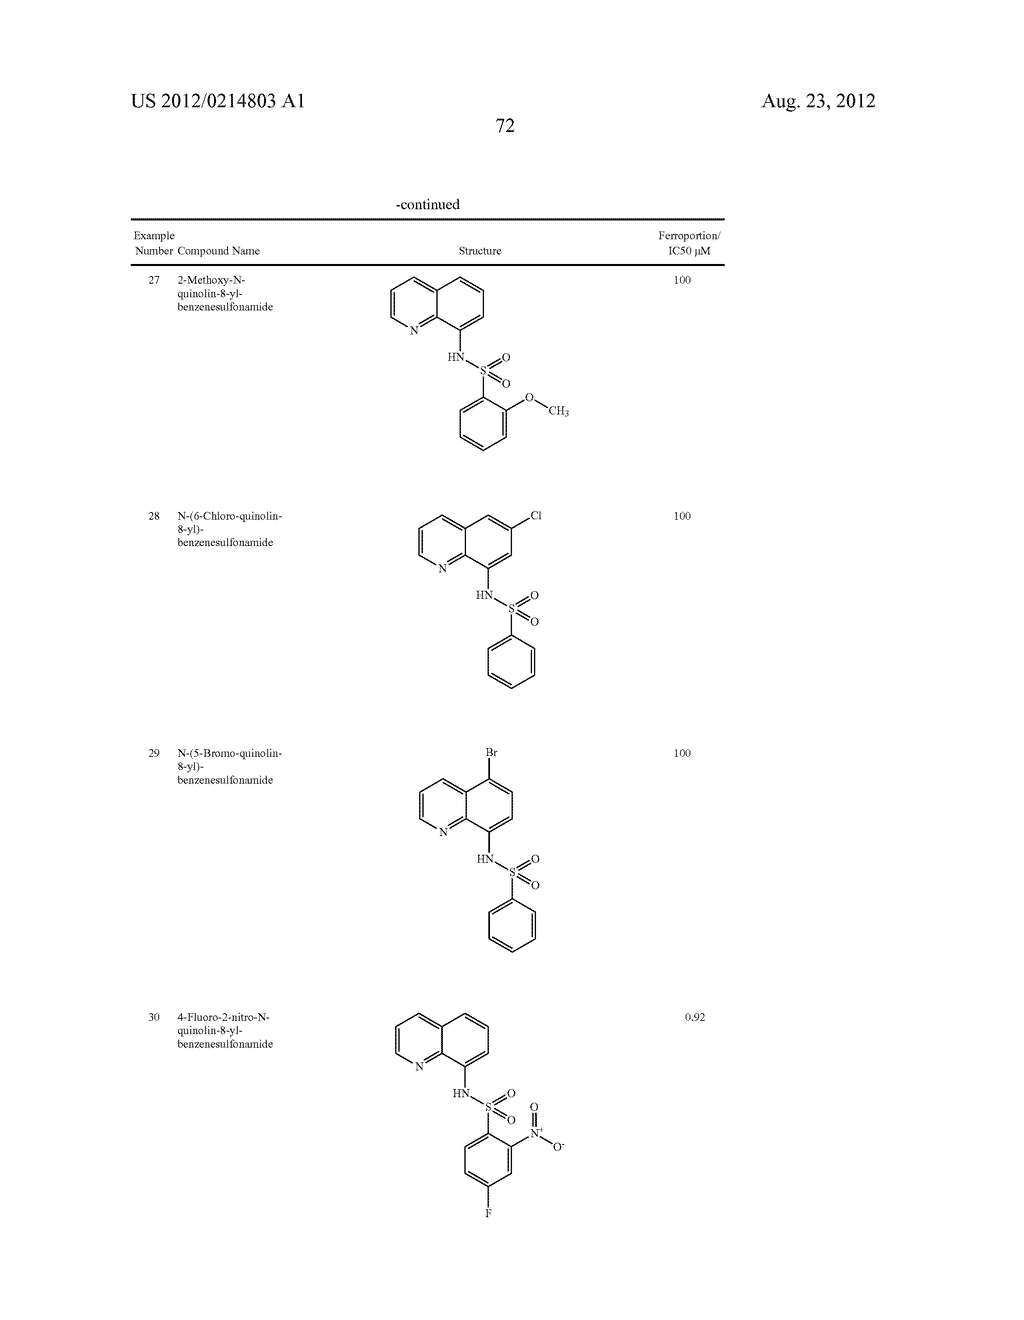 Novel Sulfonaminoquinoline Hepcidin Antagonists - diagram, schematic, and image 198